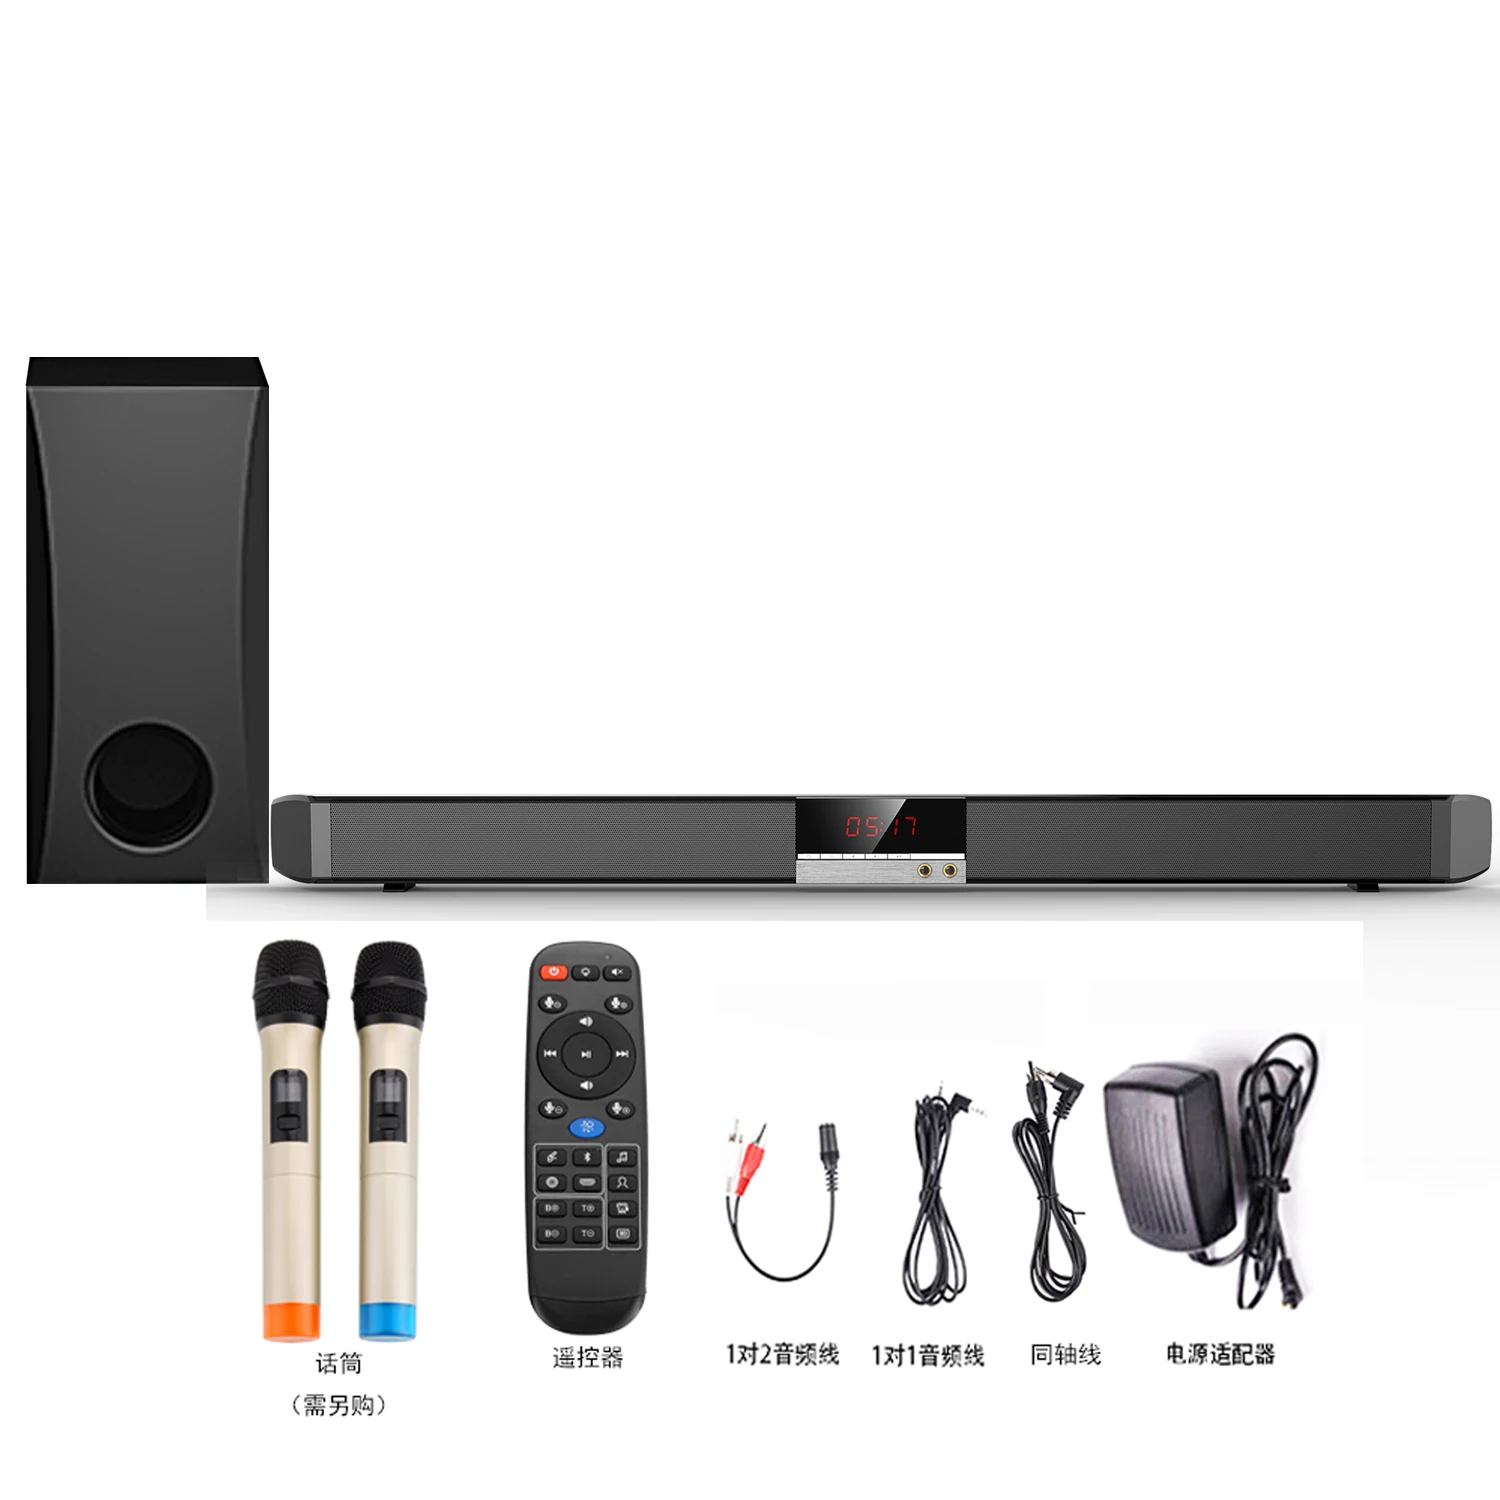 

samtronic karaoke home theatre soundbar system Wireless TV Sound bar with karaoke function SR100K, Black